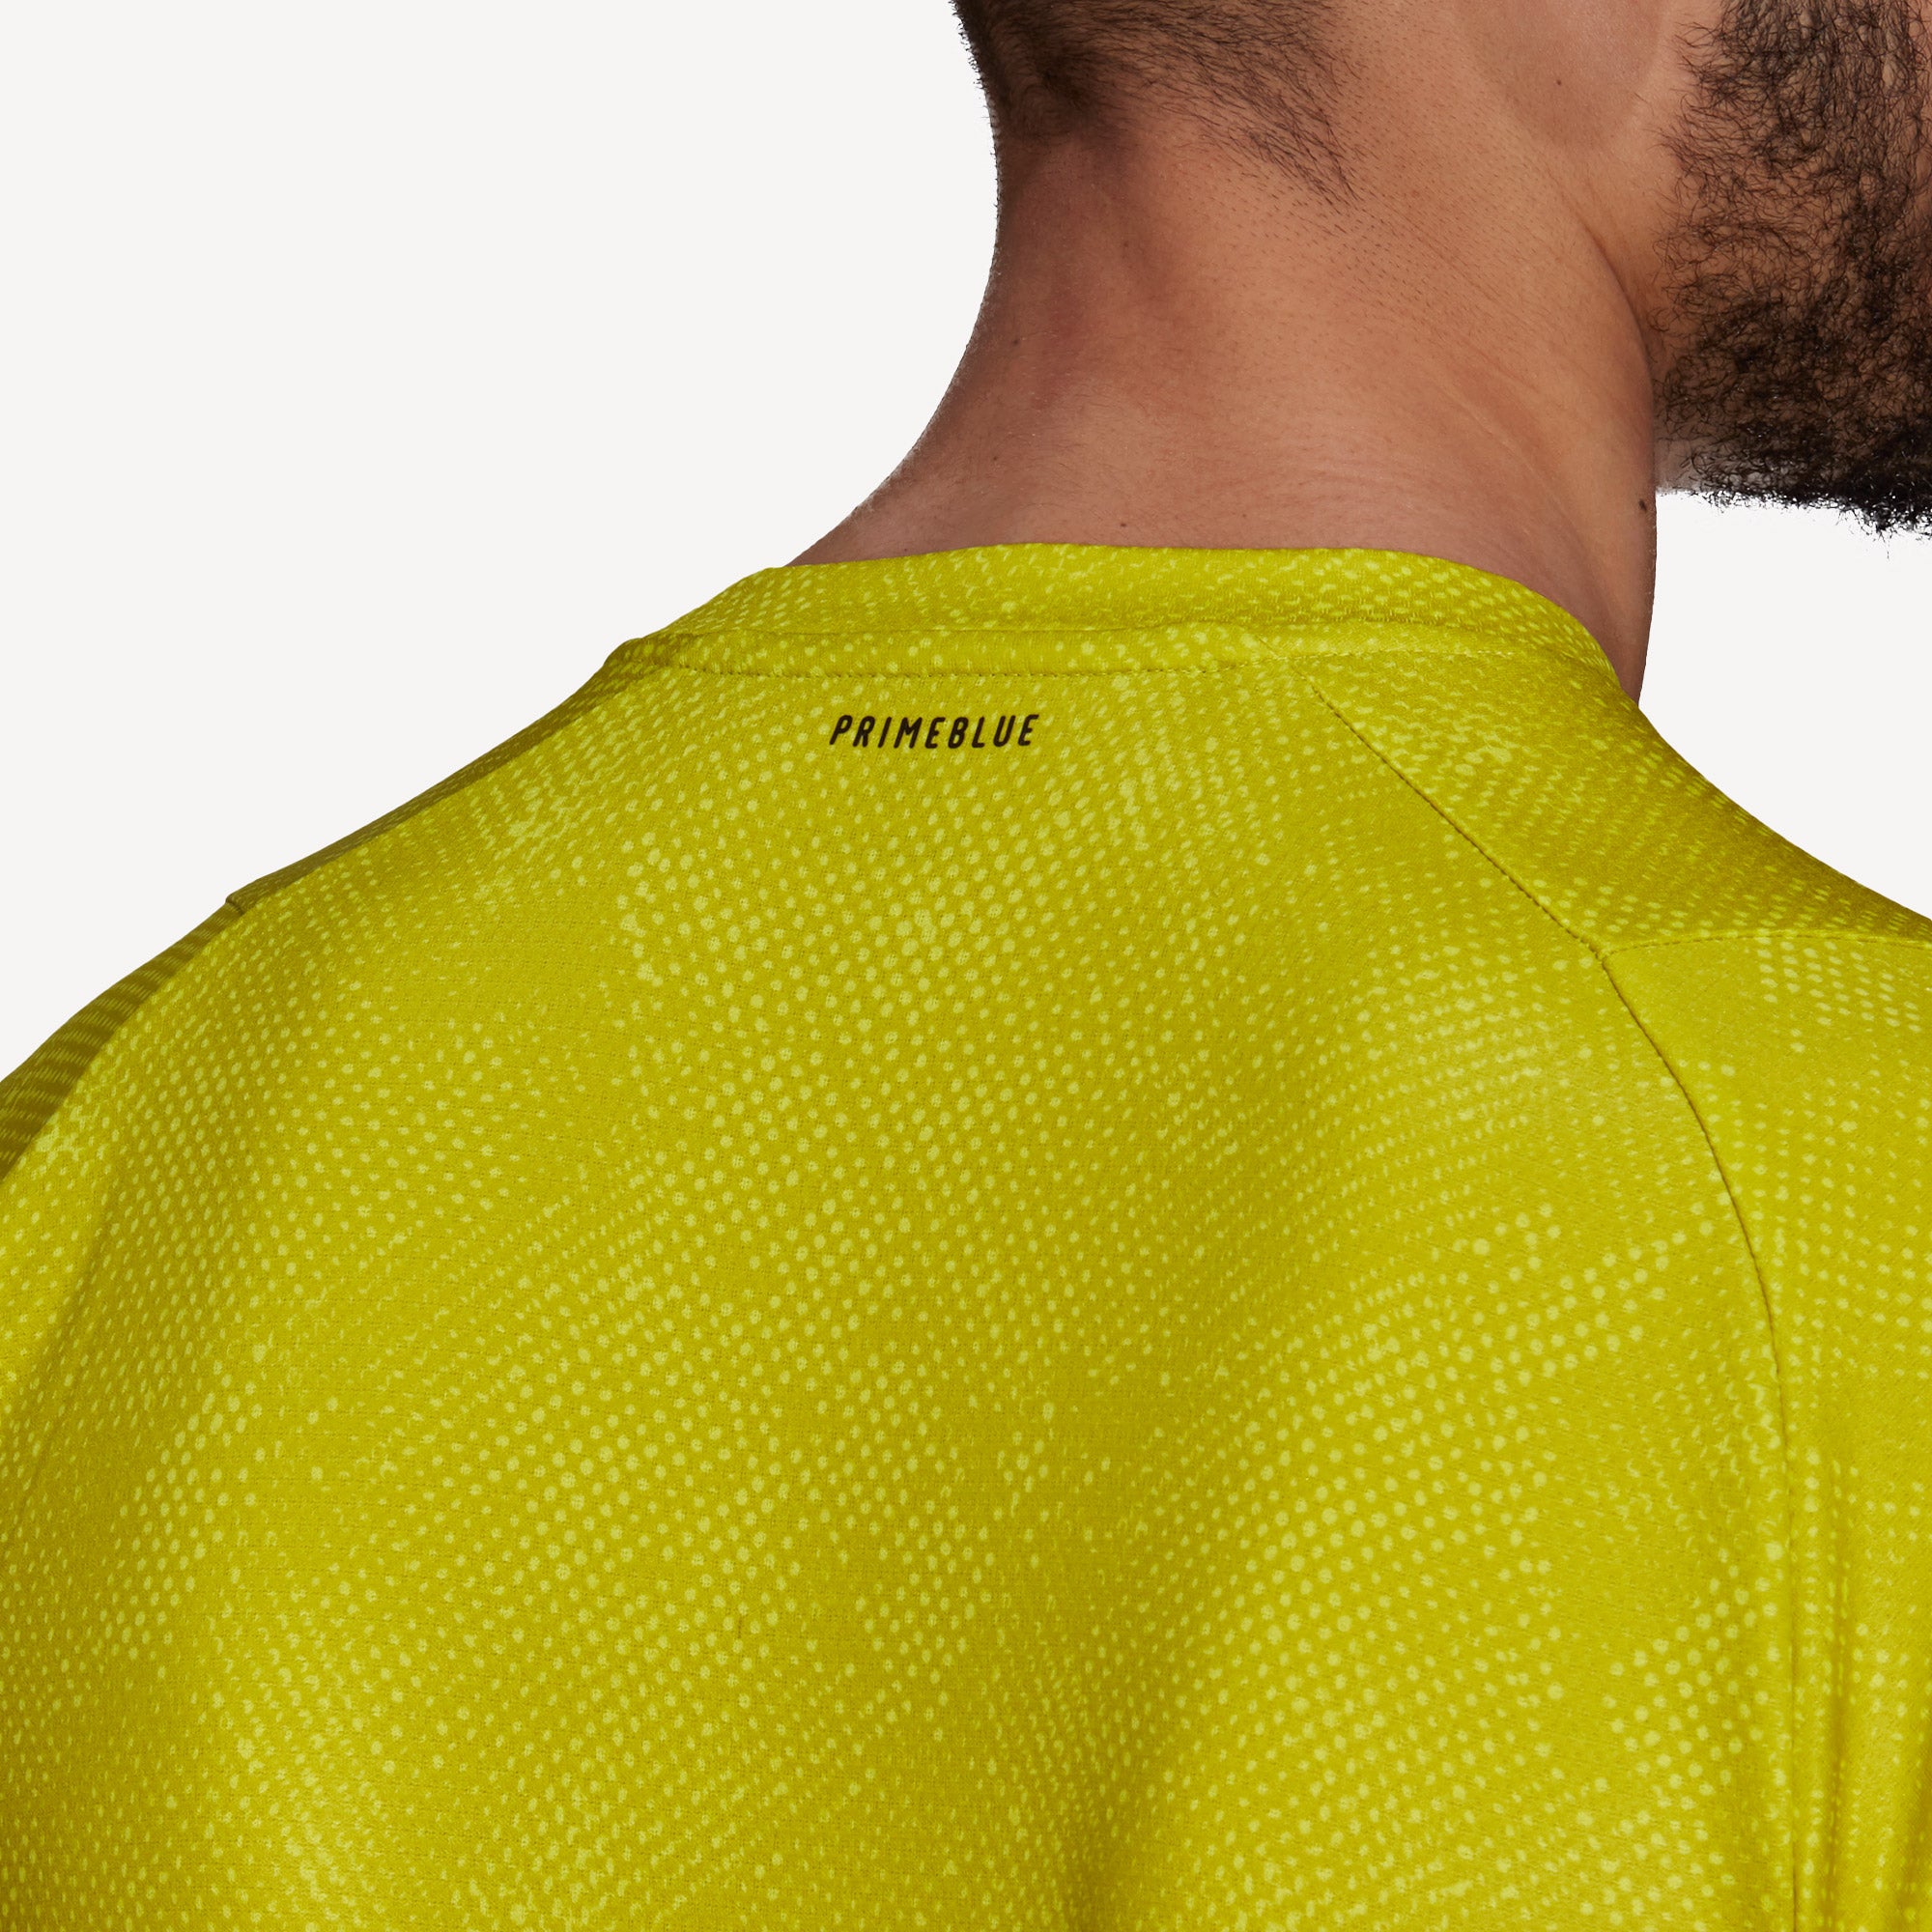 adidas Freelift Primeblue Men's Printed Tennis Shirt Yellow (5)